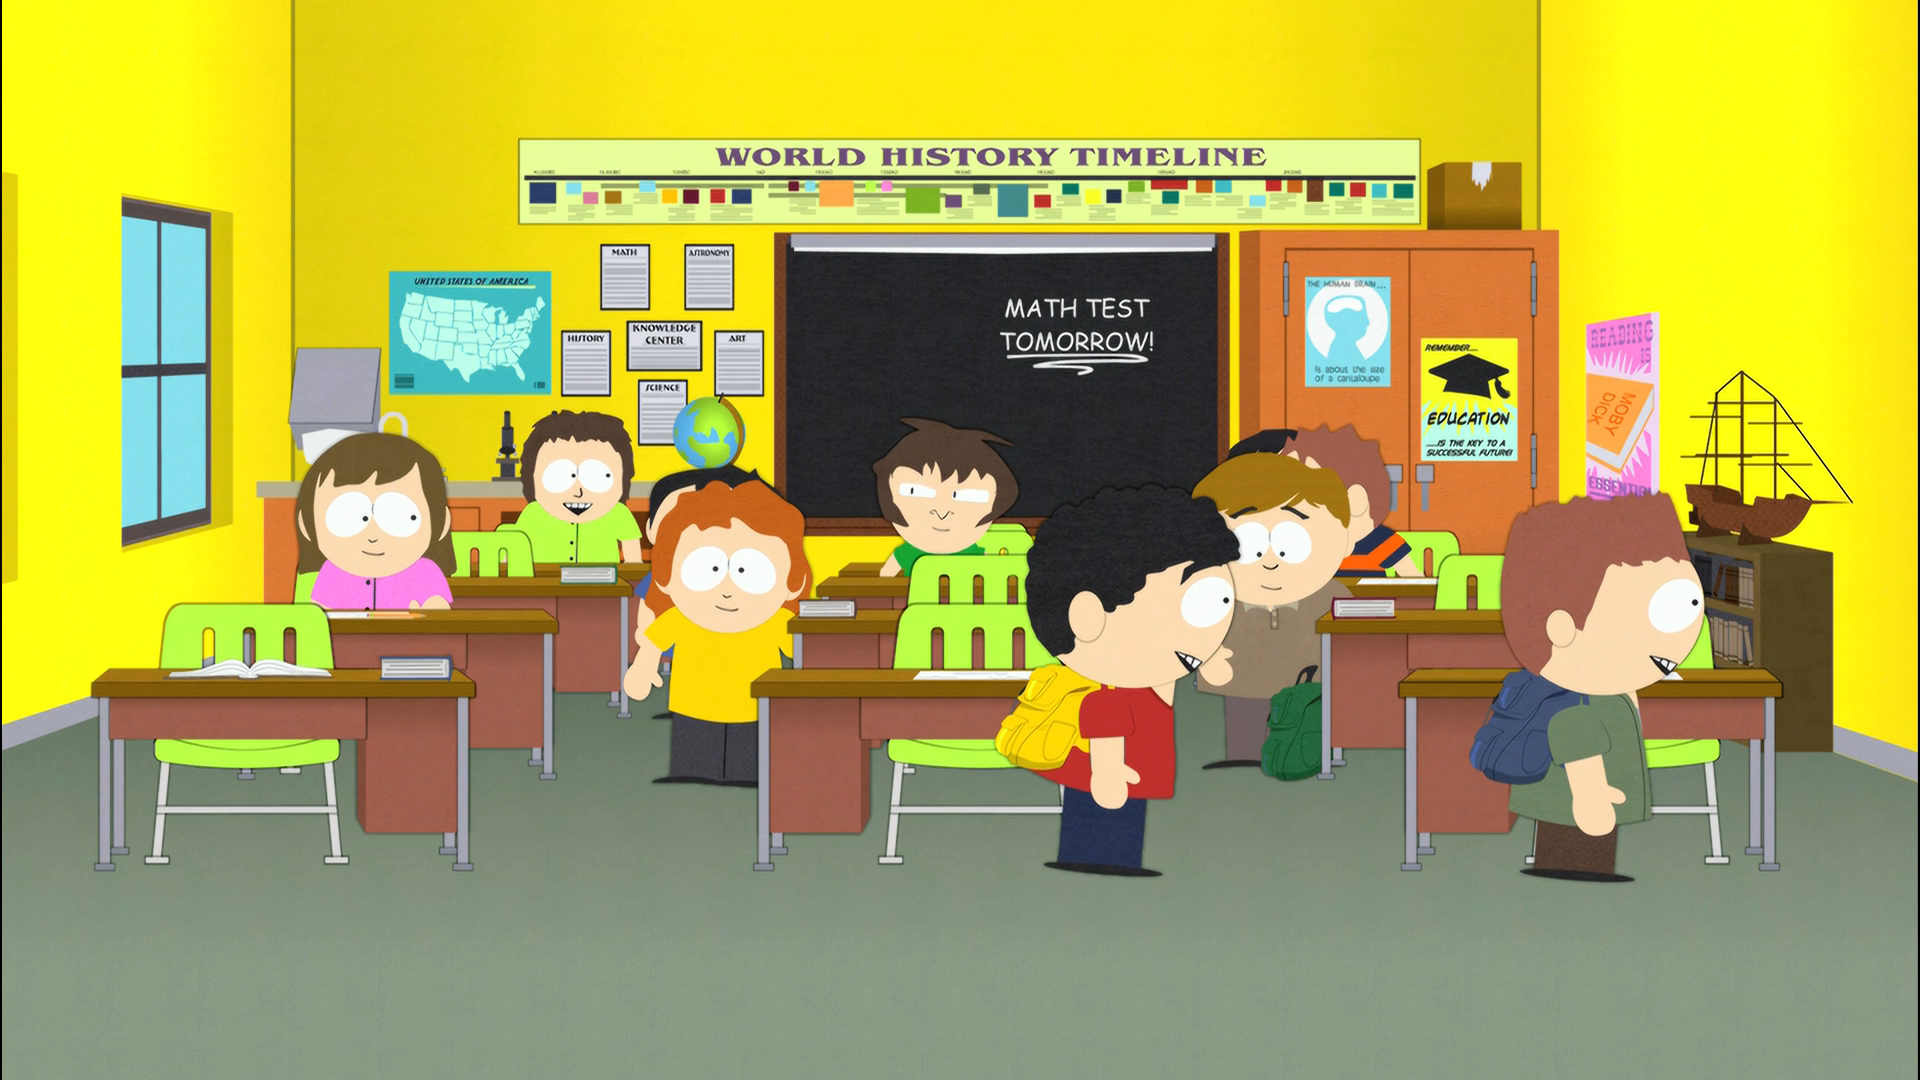 South Park School - Wikipedia